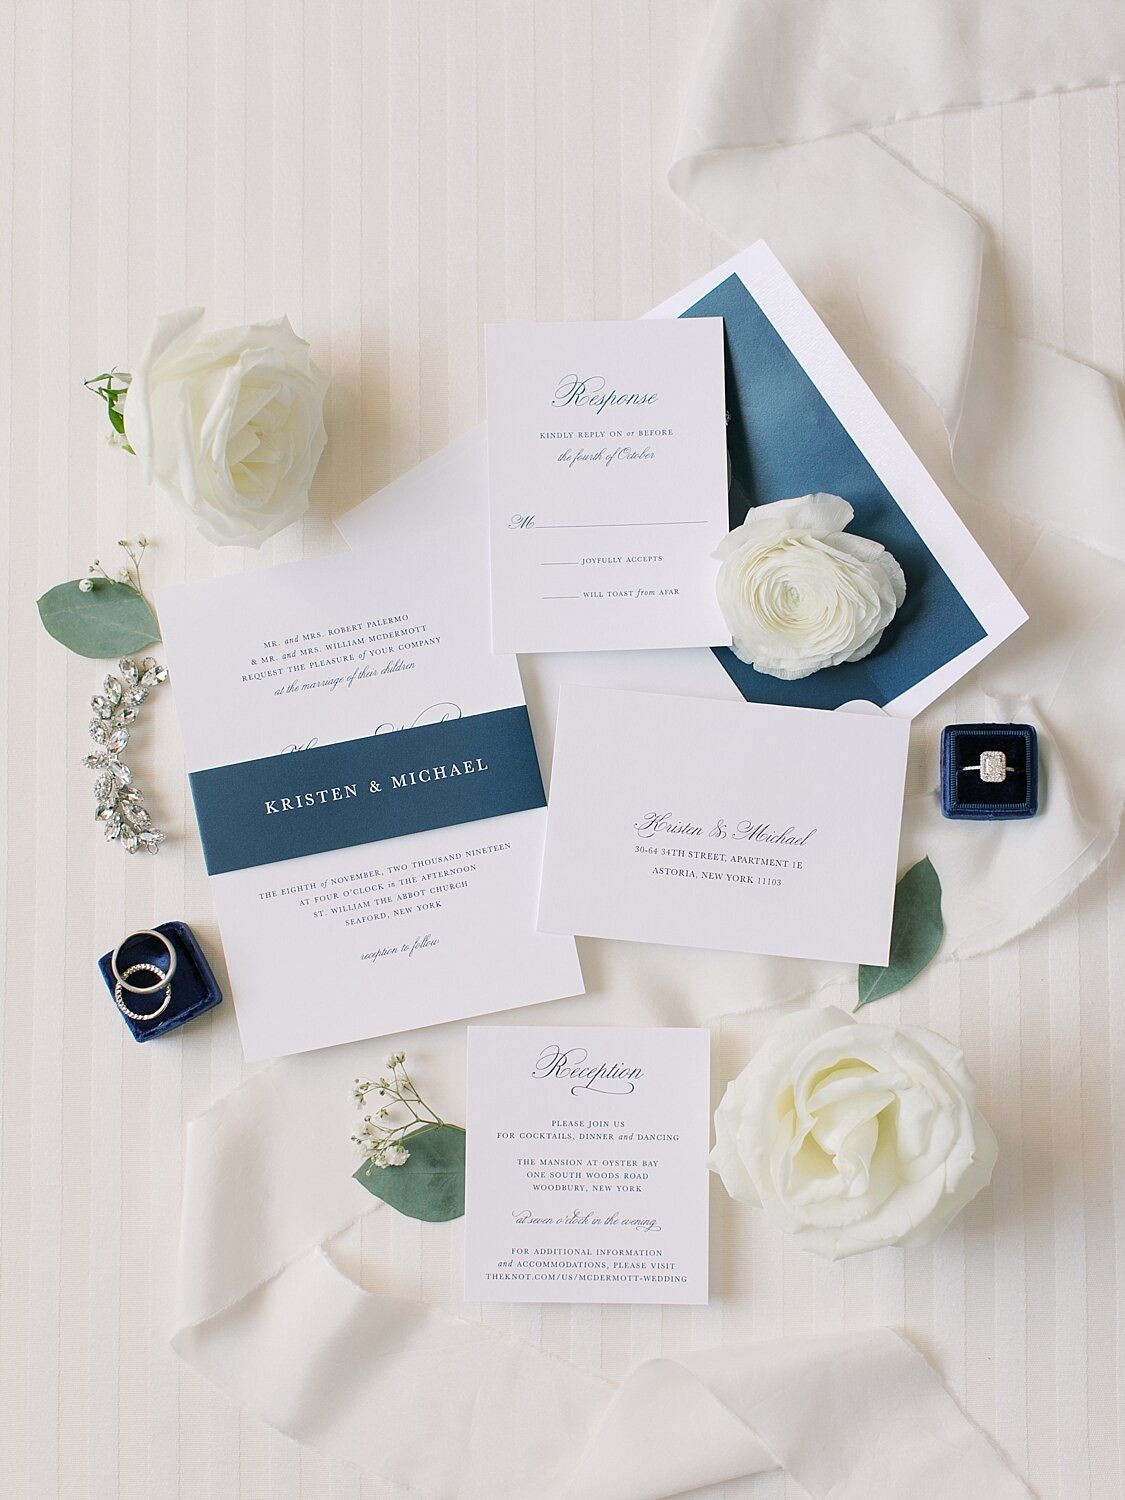 Elegant wedding stationery by Shine Wedding Invitations photographed by Asher Gardner Photography